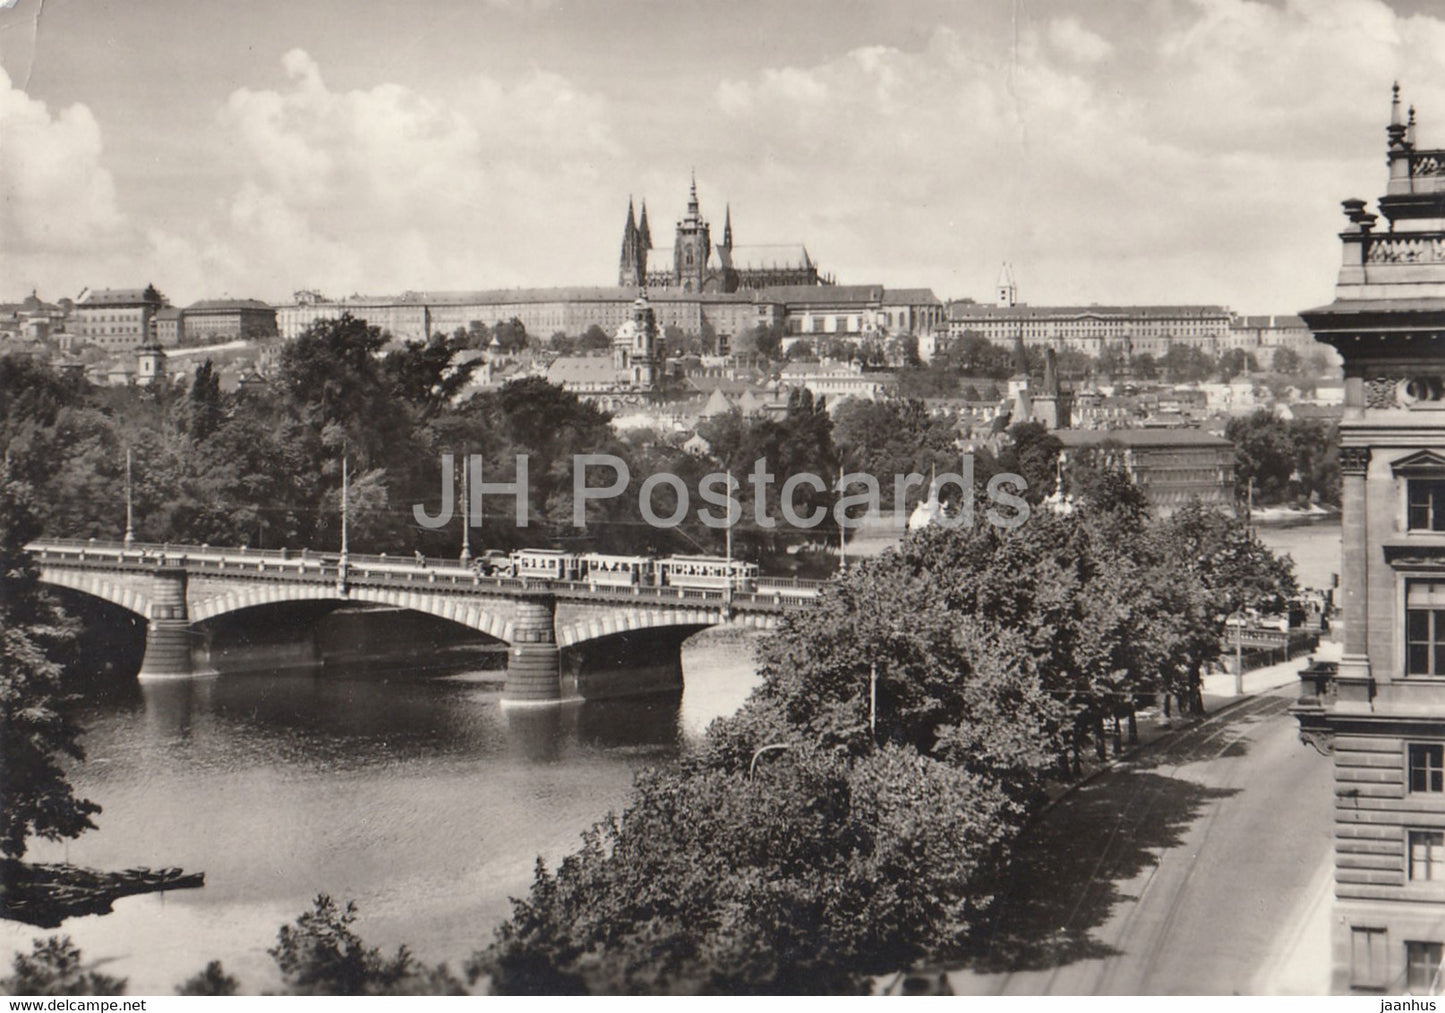 Praha - Prague - View of Prague Castle - tram - bridge - 1964 - Czech Republic - Czechoslovakia - used - JH Postcards